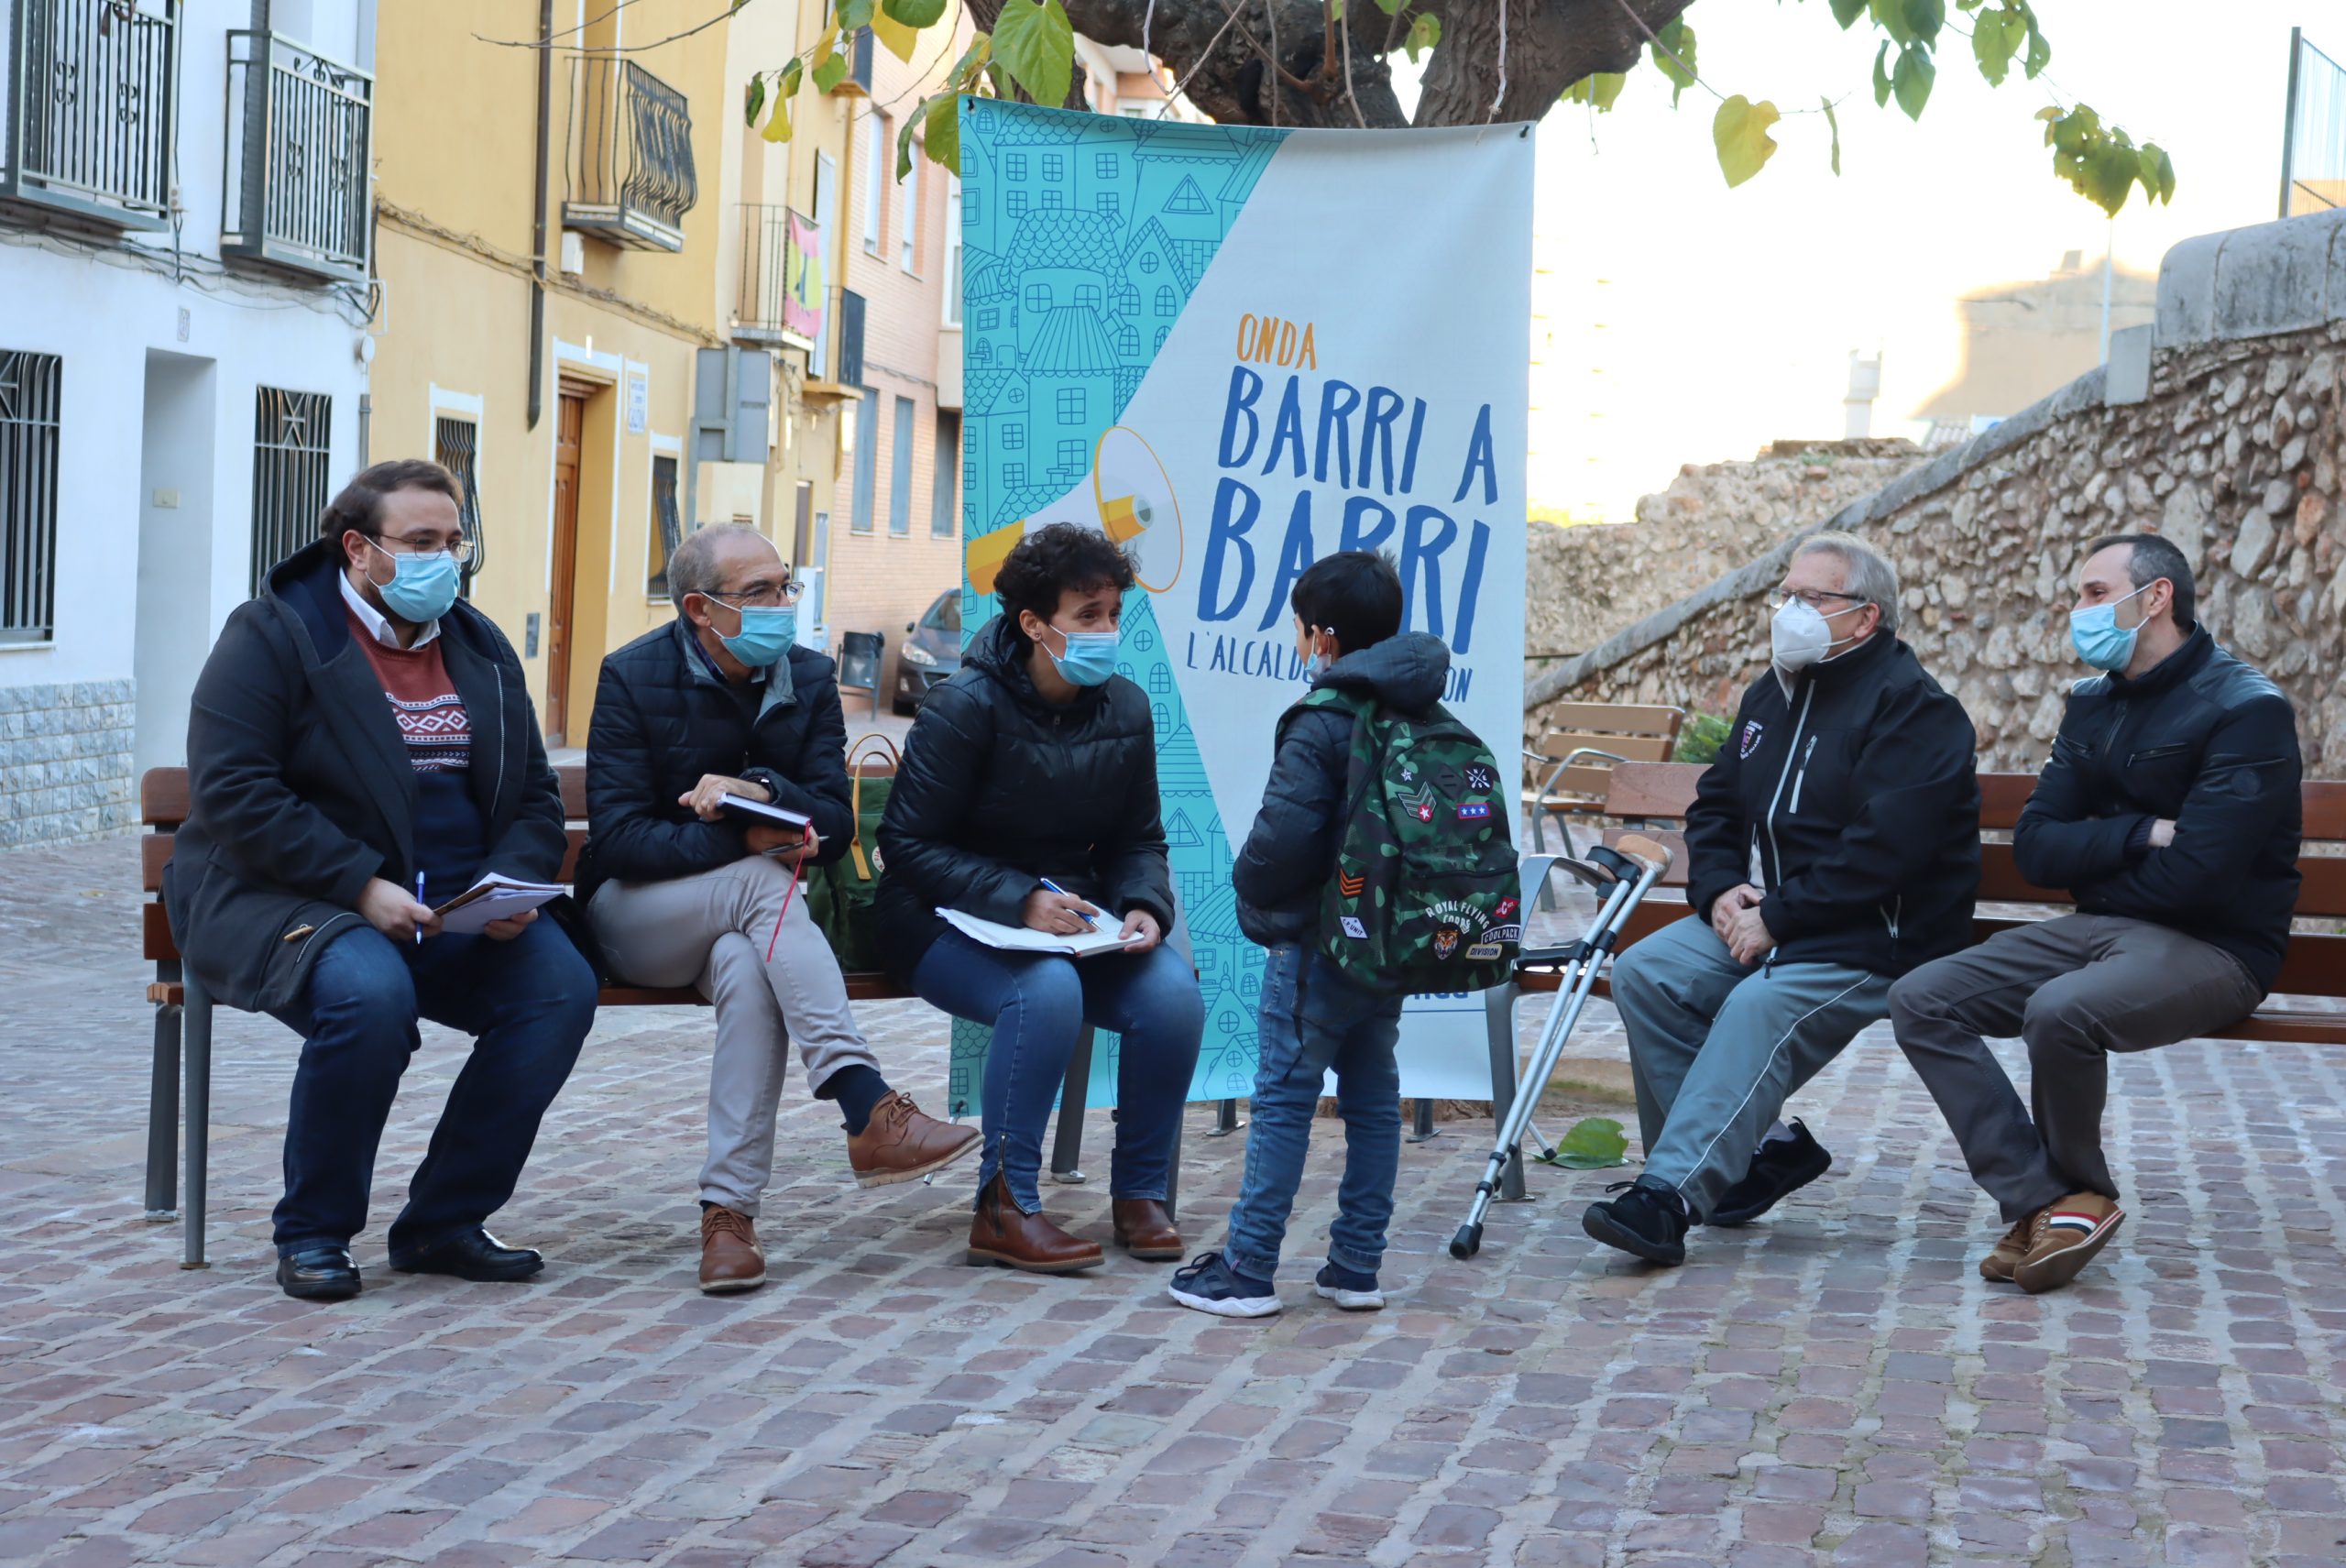 El equipo de Ballester regresa a las plazas para reactivar la campaña de escucha ciudadana ‘Onda barri a barri’